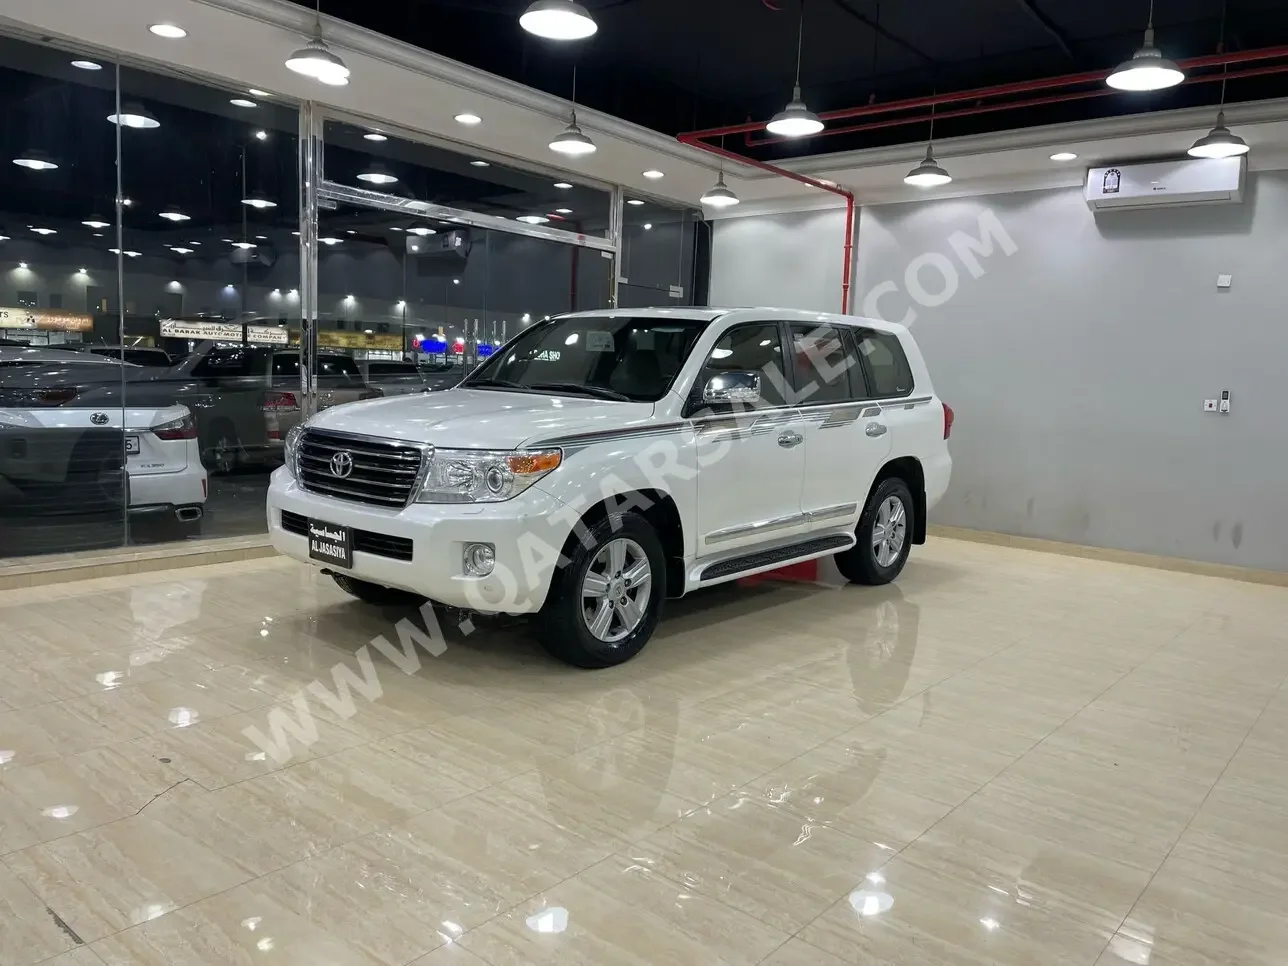 Toyota  Land Cruiser  GXR  2014  Automatic  40,000 Km  8 Cylinder  Four Wheel Drive (4WD)  SUV  White